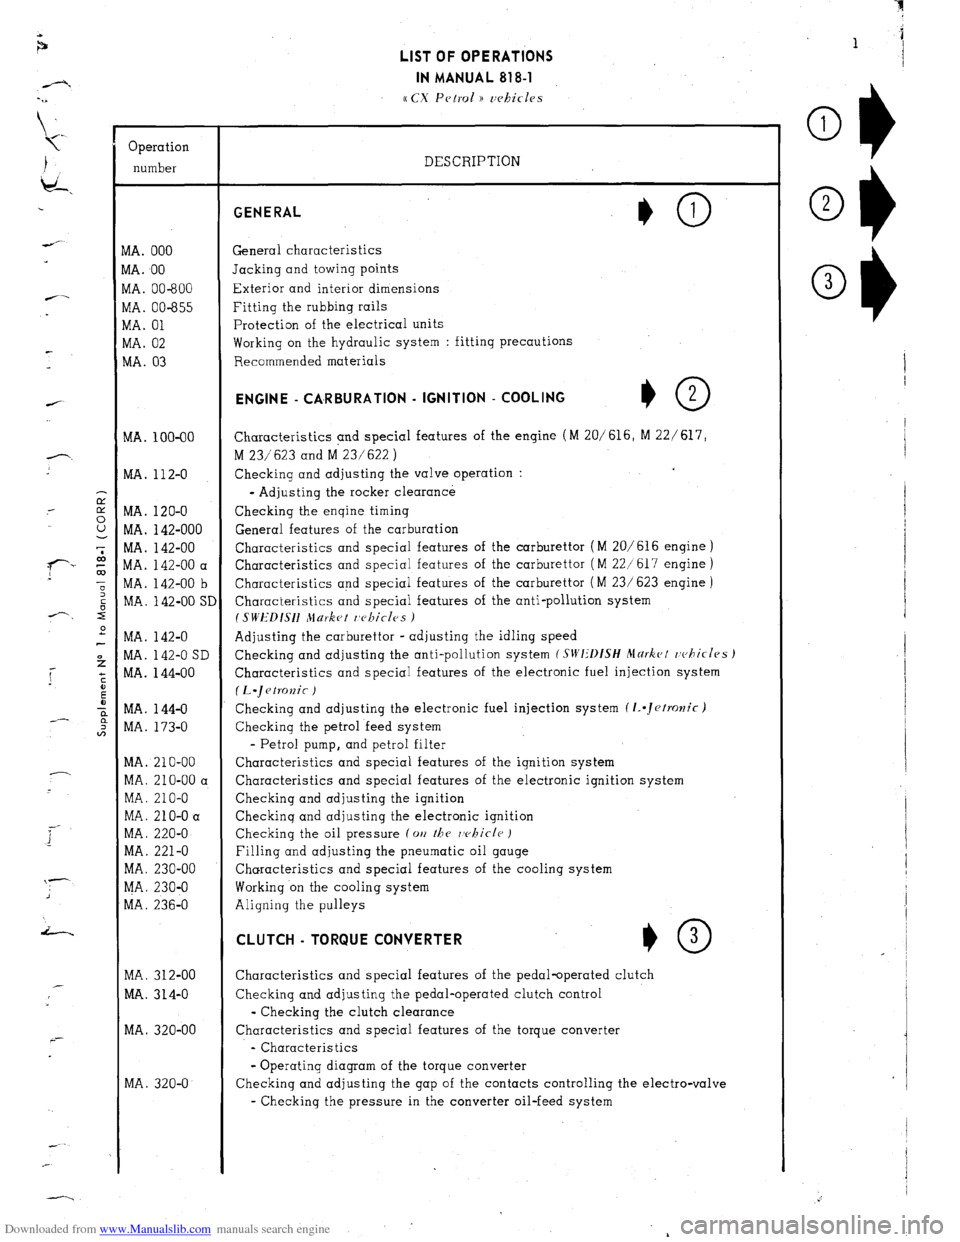 Citroen CX 1980 1.G Workshop Manual Downloaded from www.Manualslib.com manuals search engine Operation 
number 
VIA. 000 
VIA. 00 
VIA. 00-600 
vlA. 00-655 
VIA. 01 
WA. 02 
MA. 03 
MA. 100-00 
MA. 112-O 
MA. 120-O 
MA. 142-000 
MA. 142